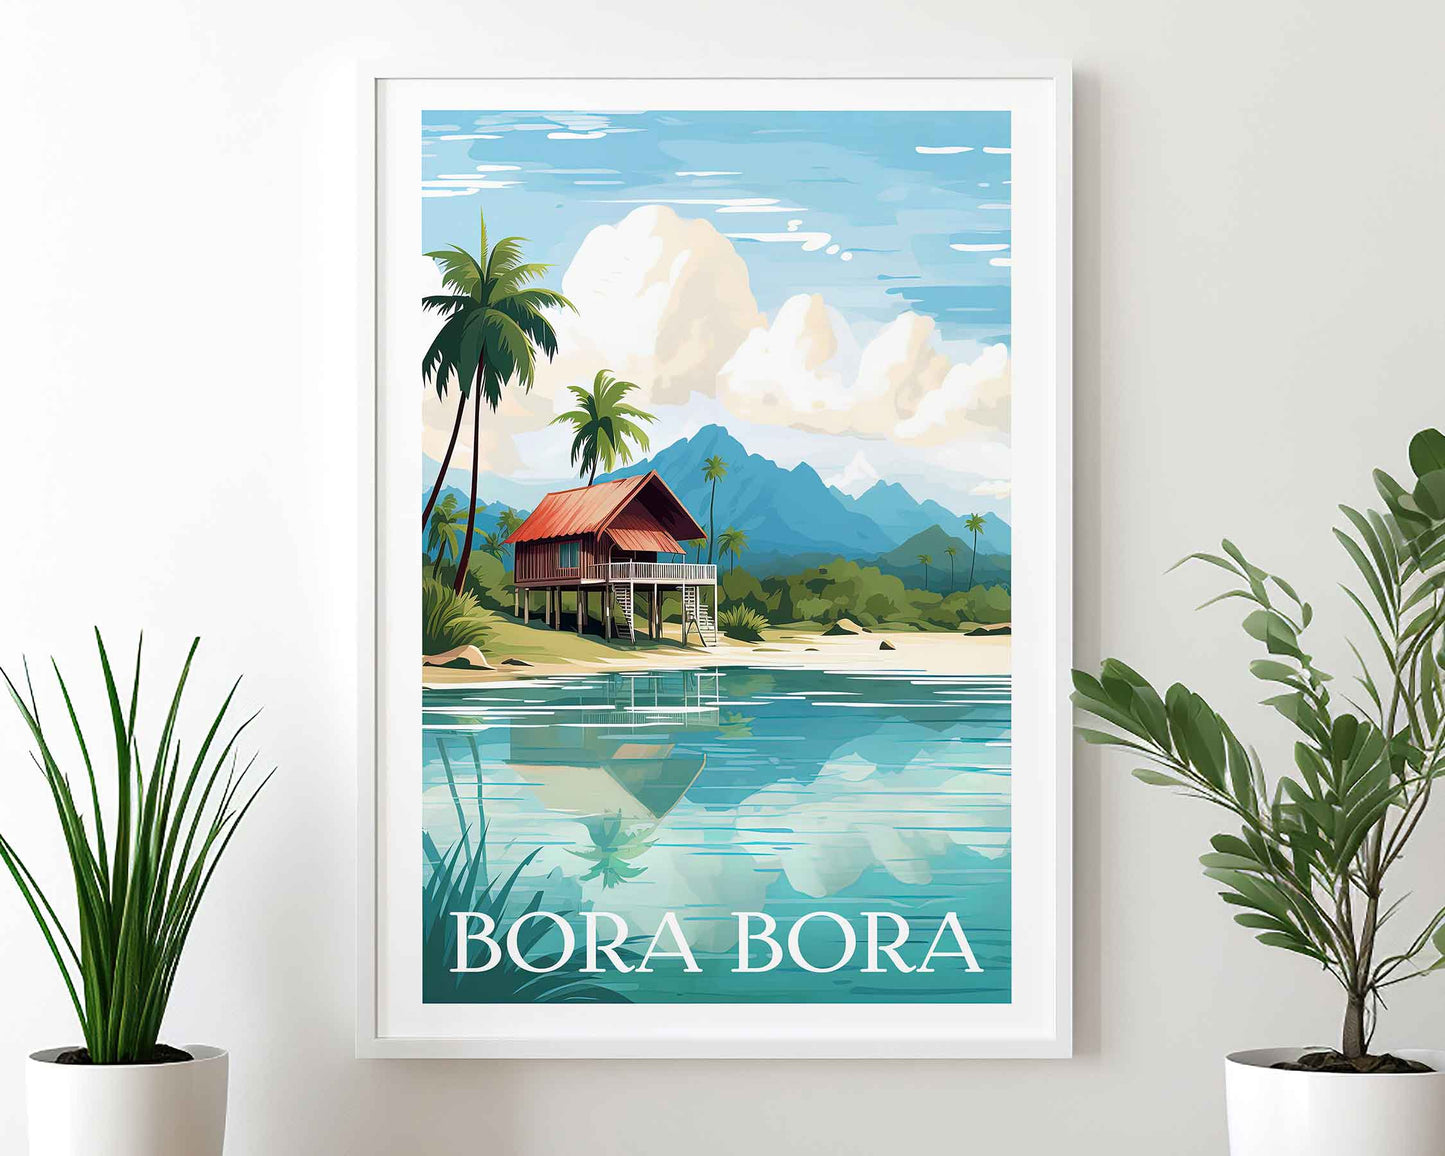 Framed Image of Bora Bora Poster Travel Wall Art Prints Illustration